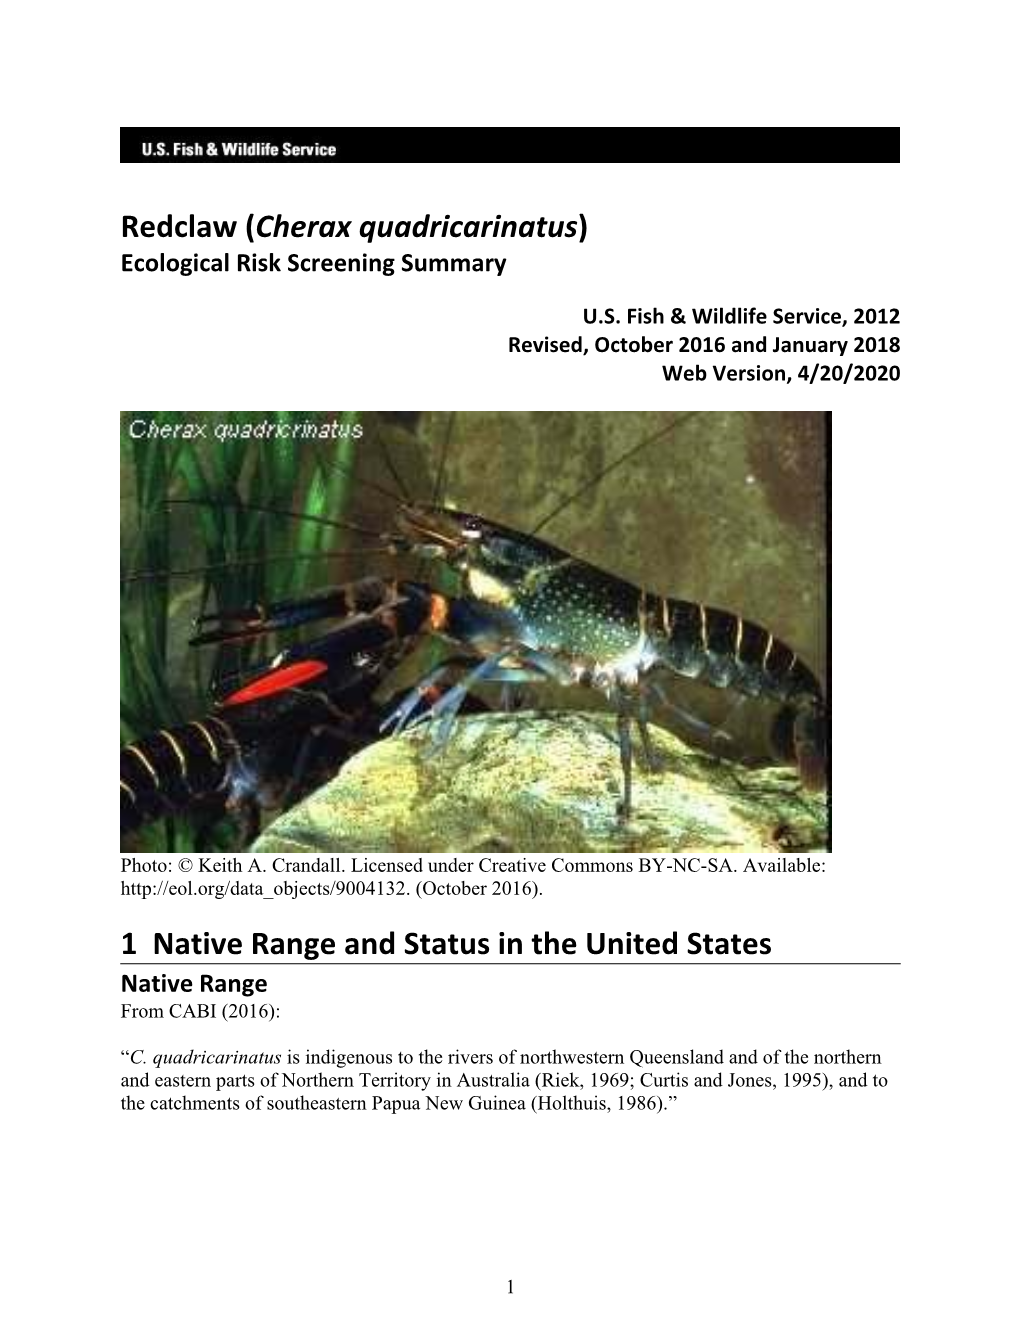 Redclaw (Cherax Quadricarinatus) Ecological Risk Screening Summary